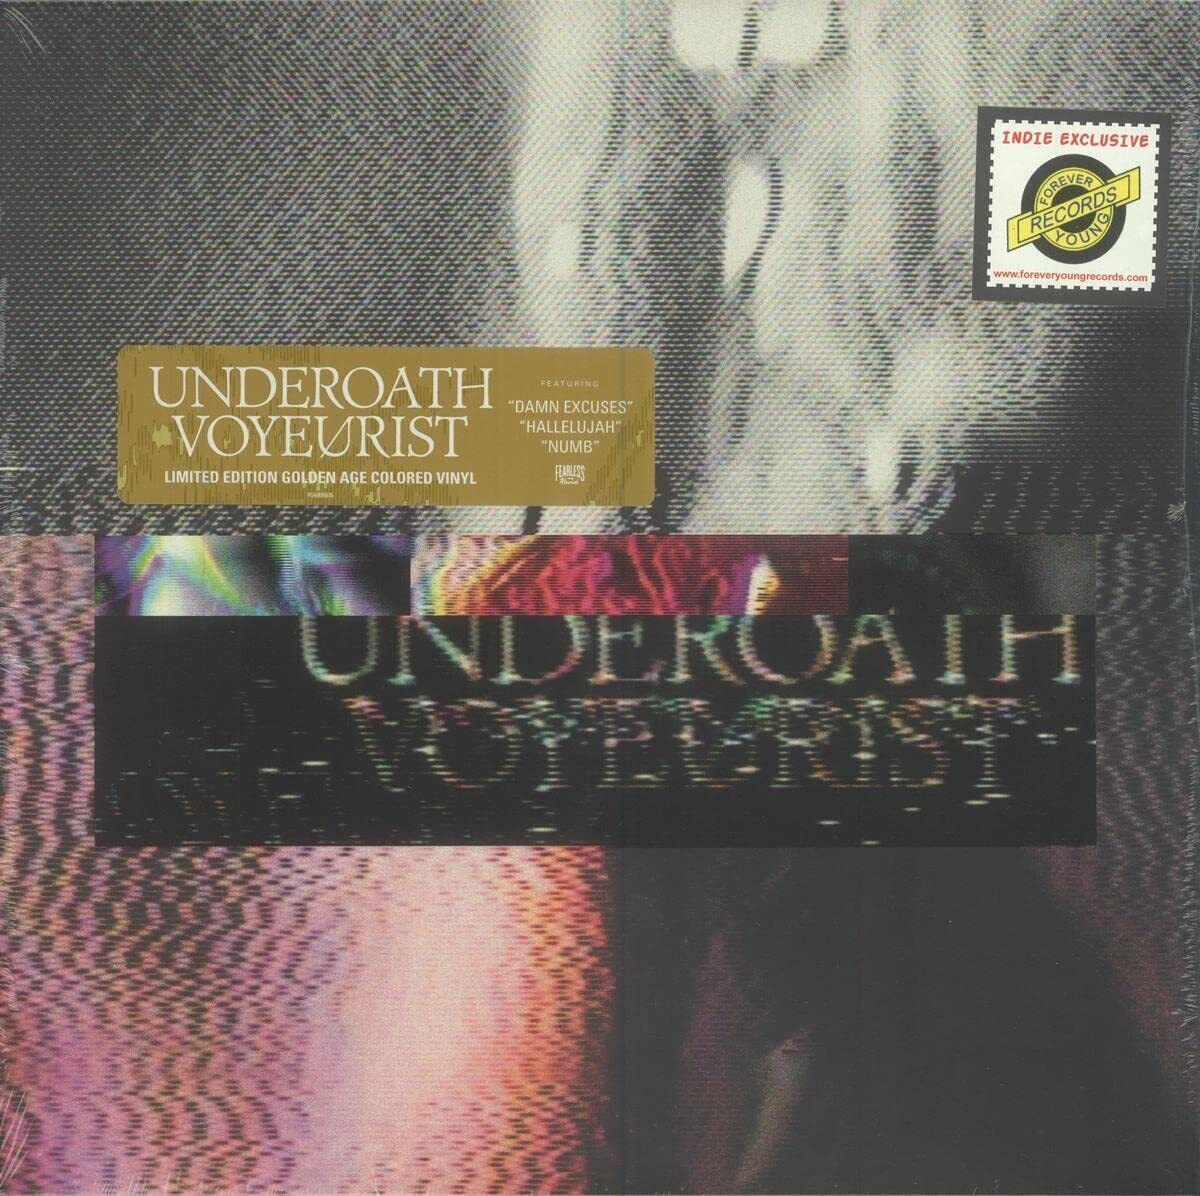 UNDEROATH Voyeurist Golden Age (Vinyl) (UK IMPORT)